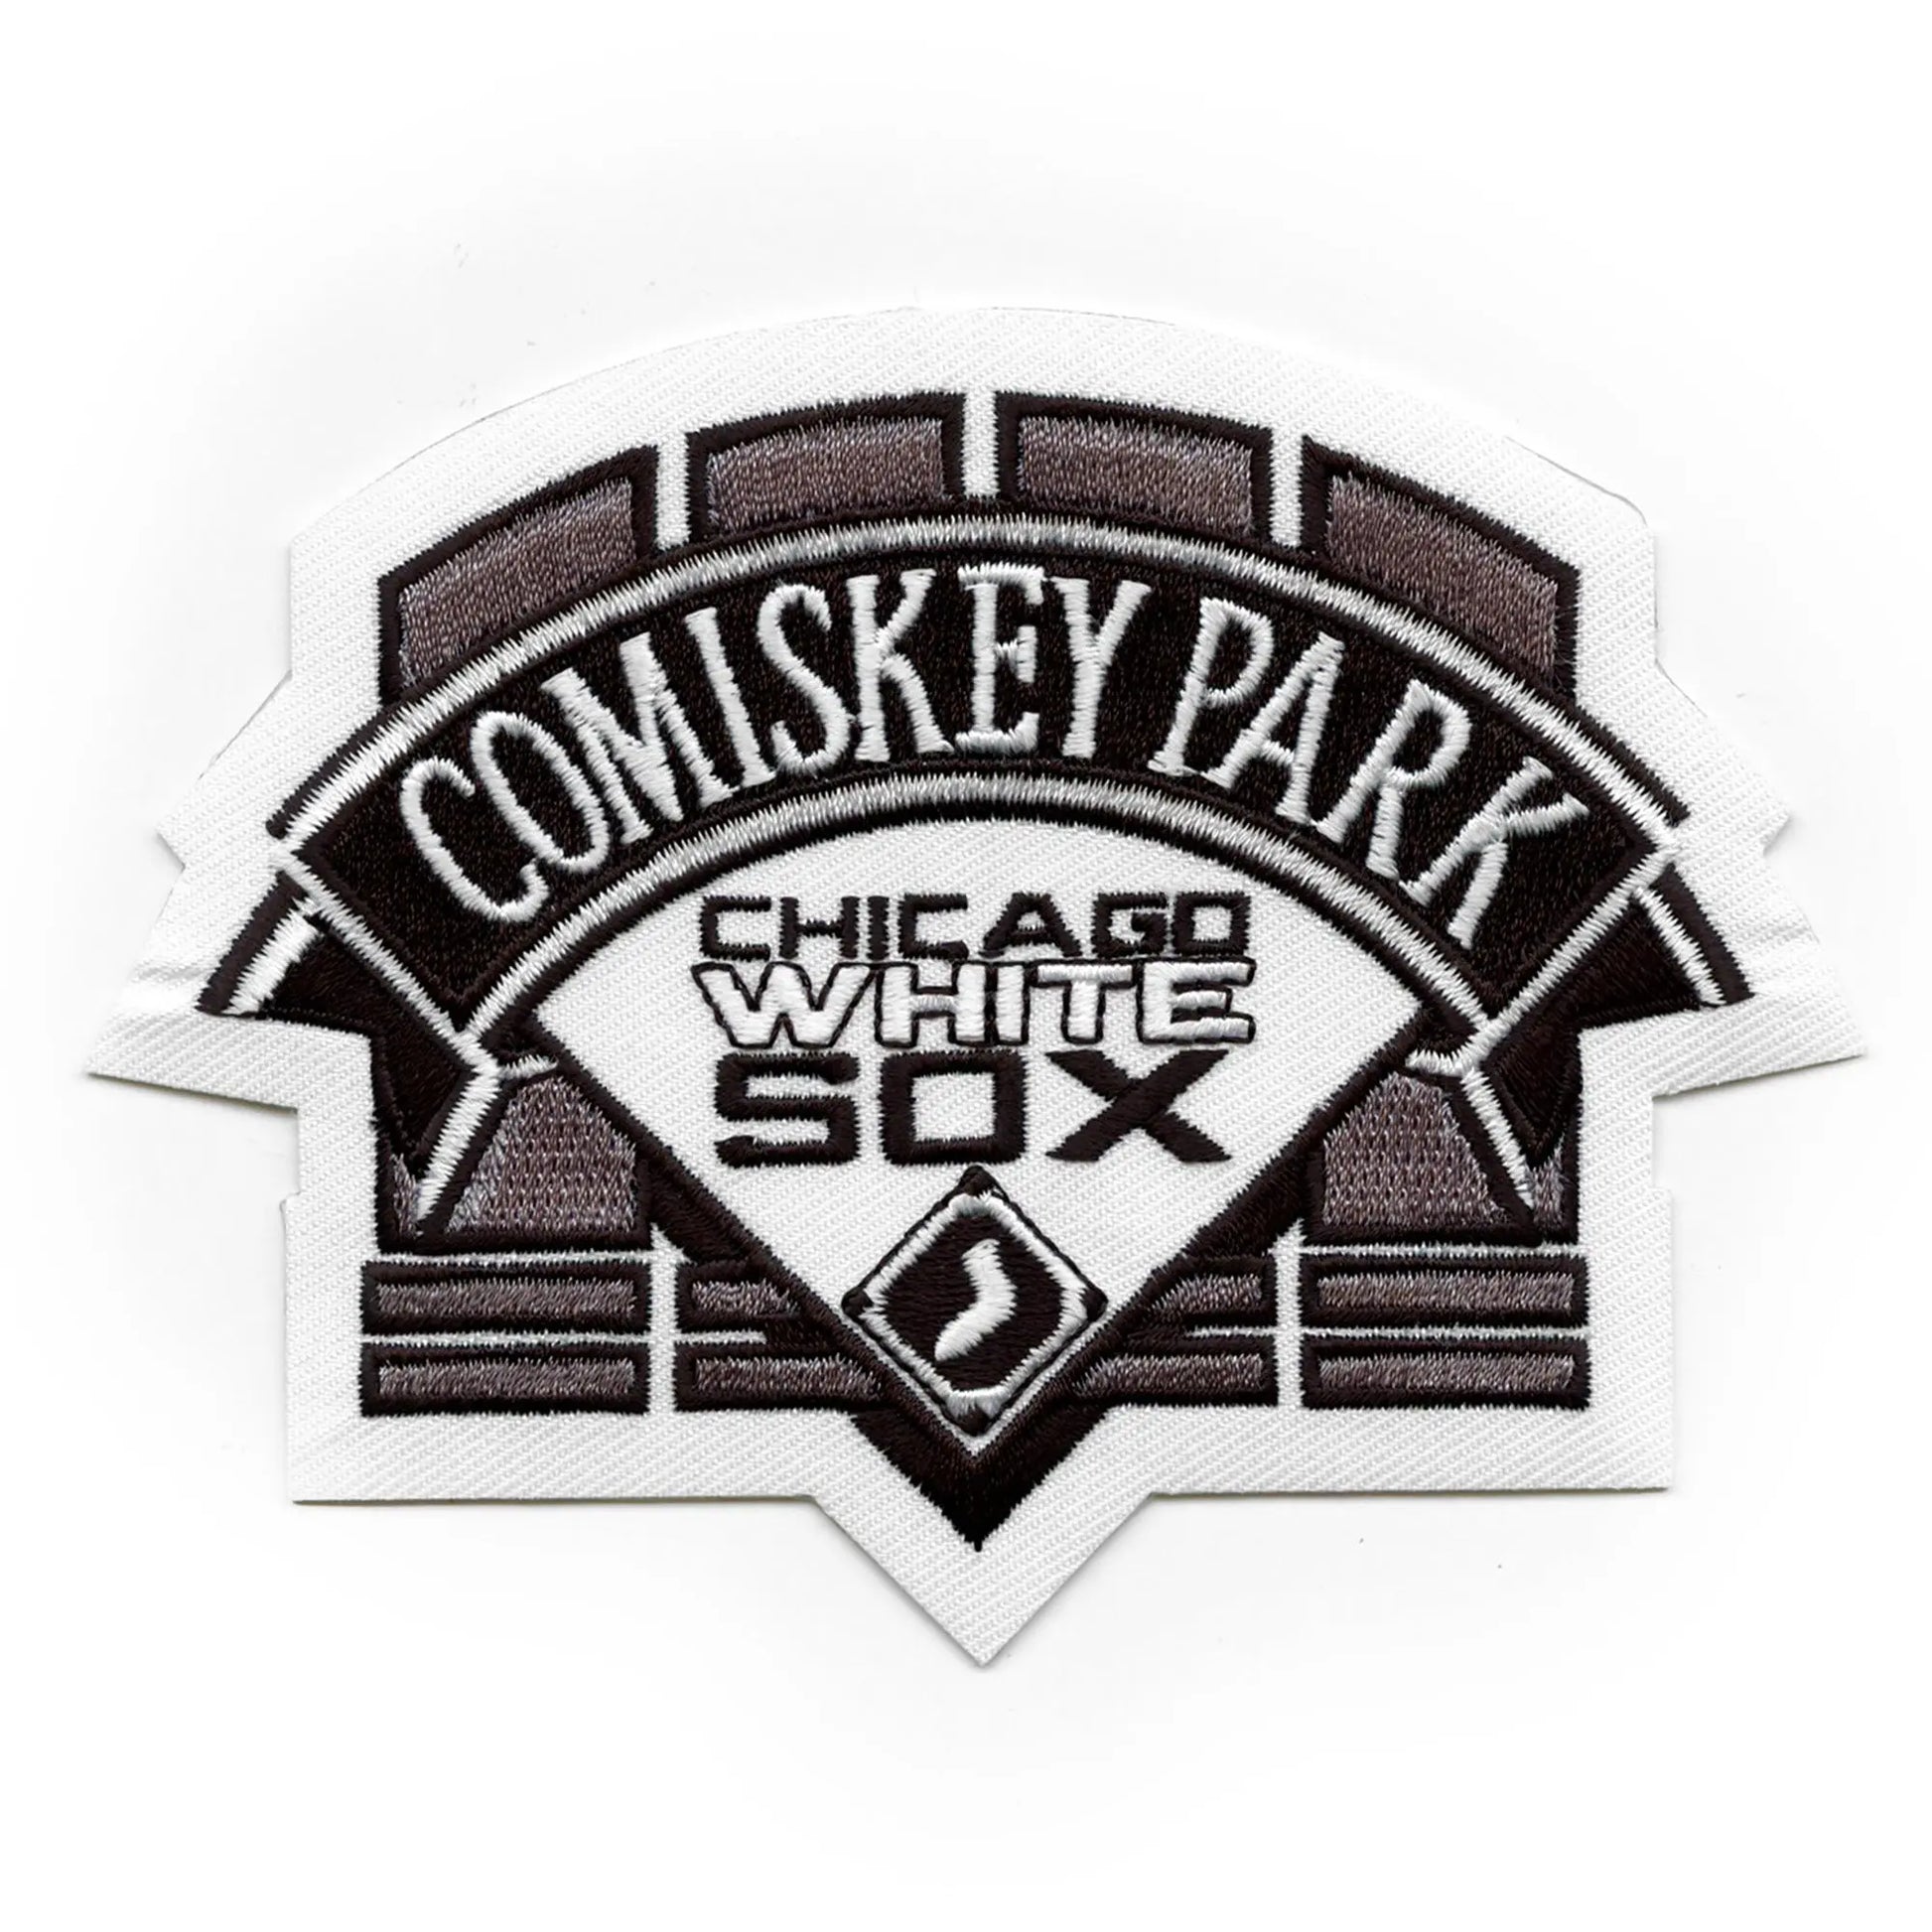 Chicago White Sox Comiskey Park Logo Jersey Sleeve Patch